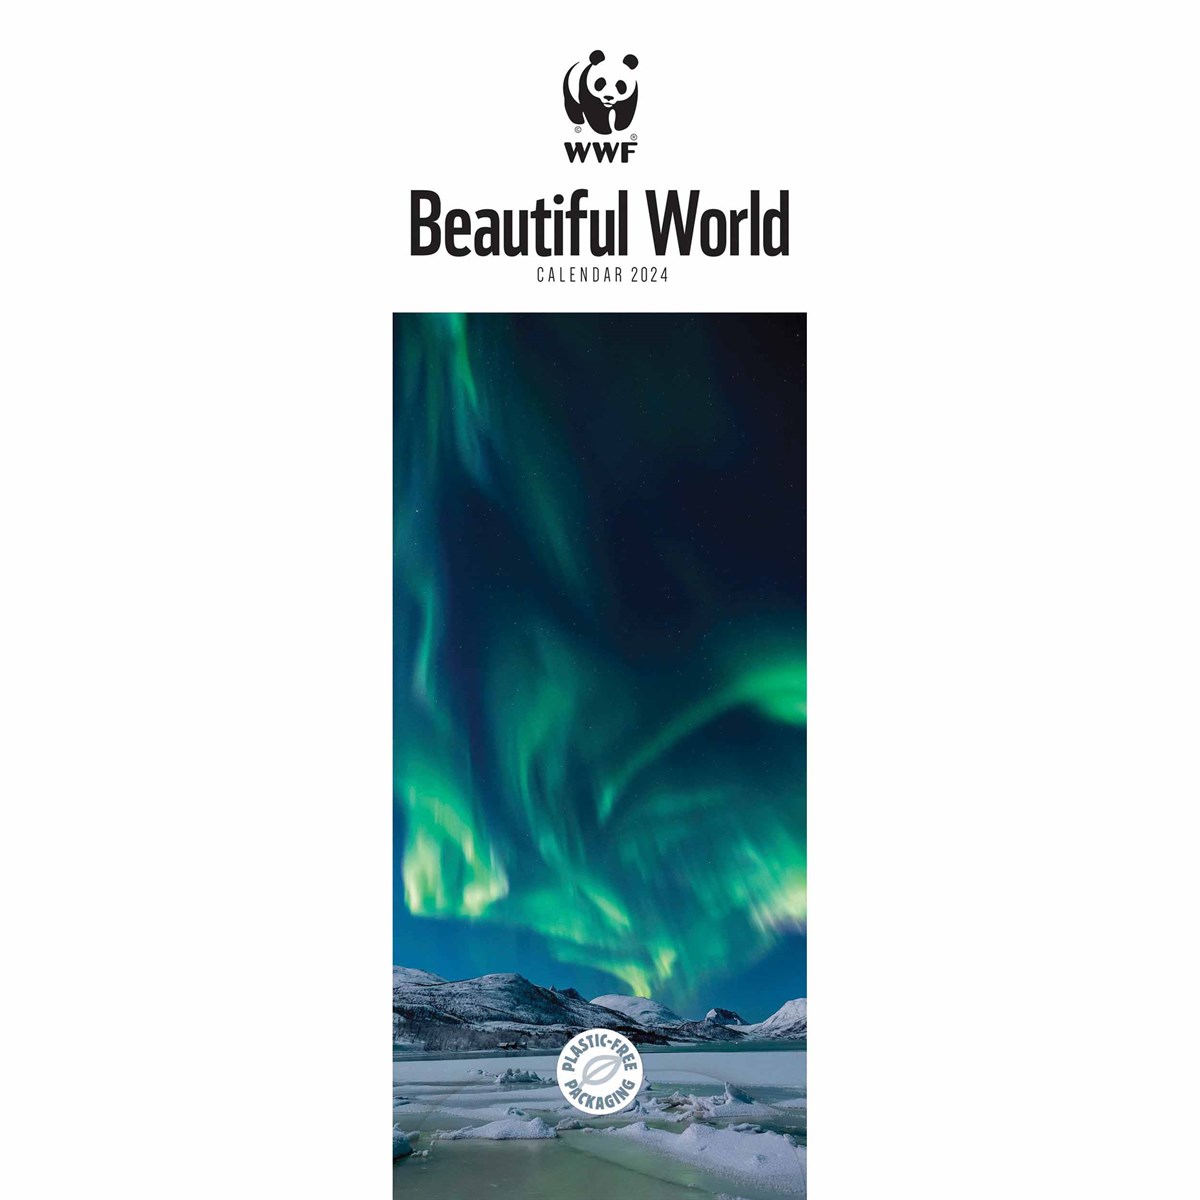 Calendar 2024 - Beautiful World WWF | Carousel